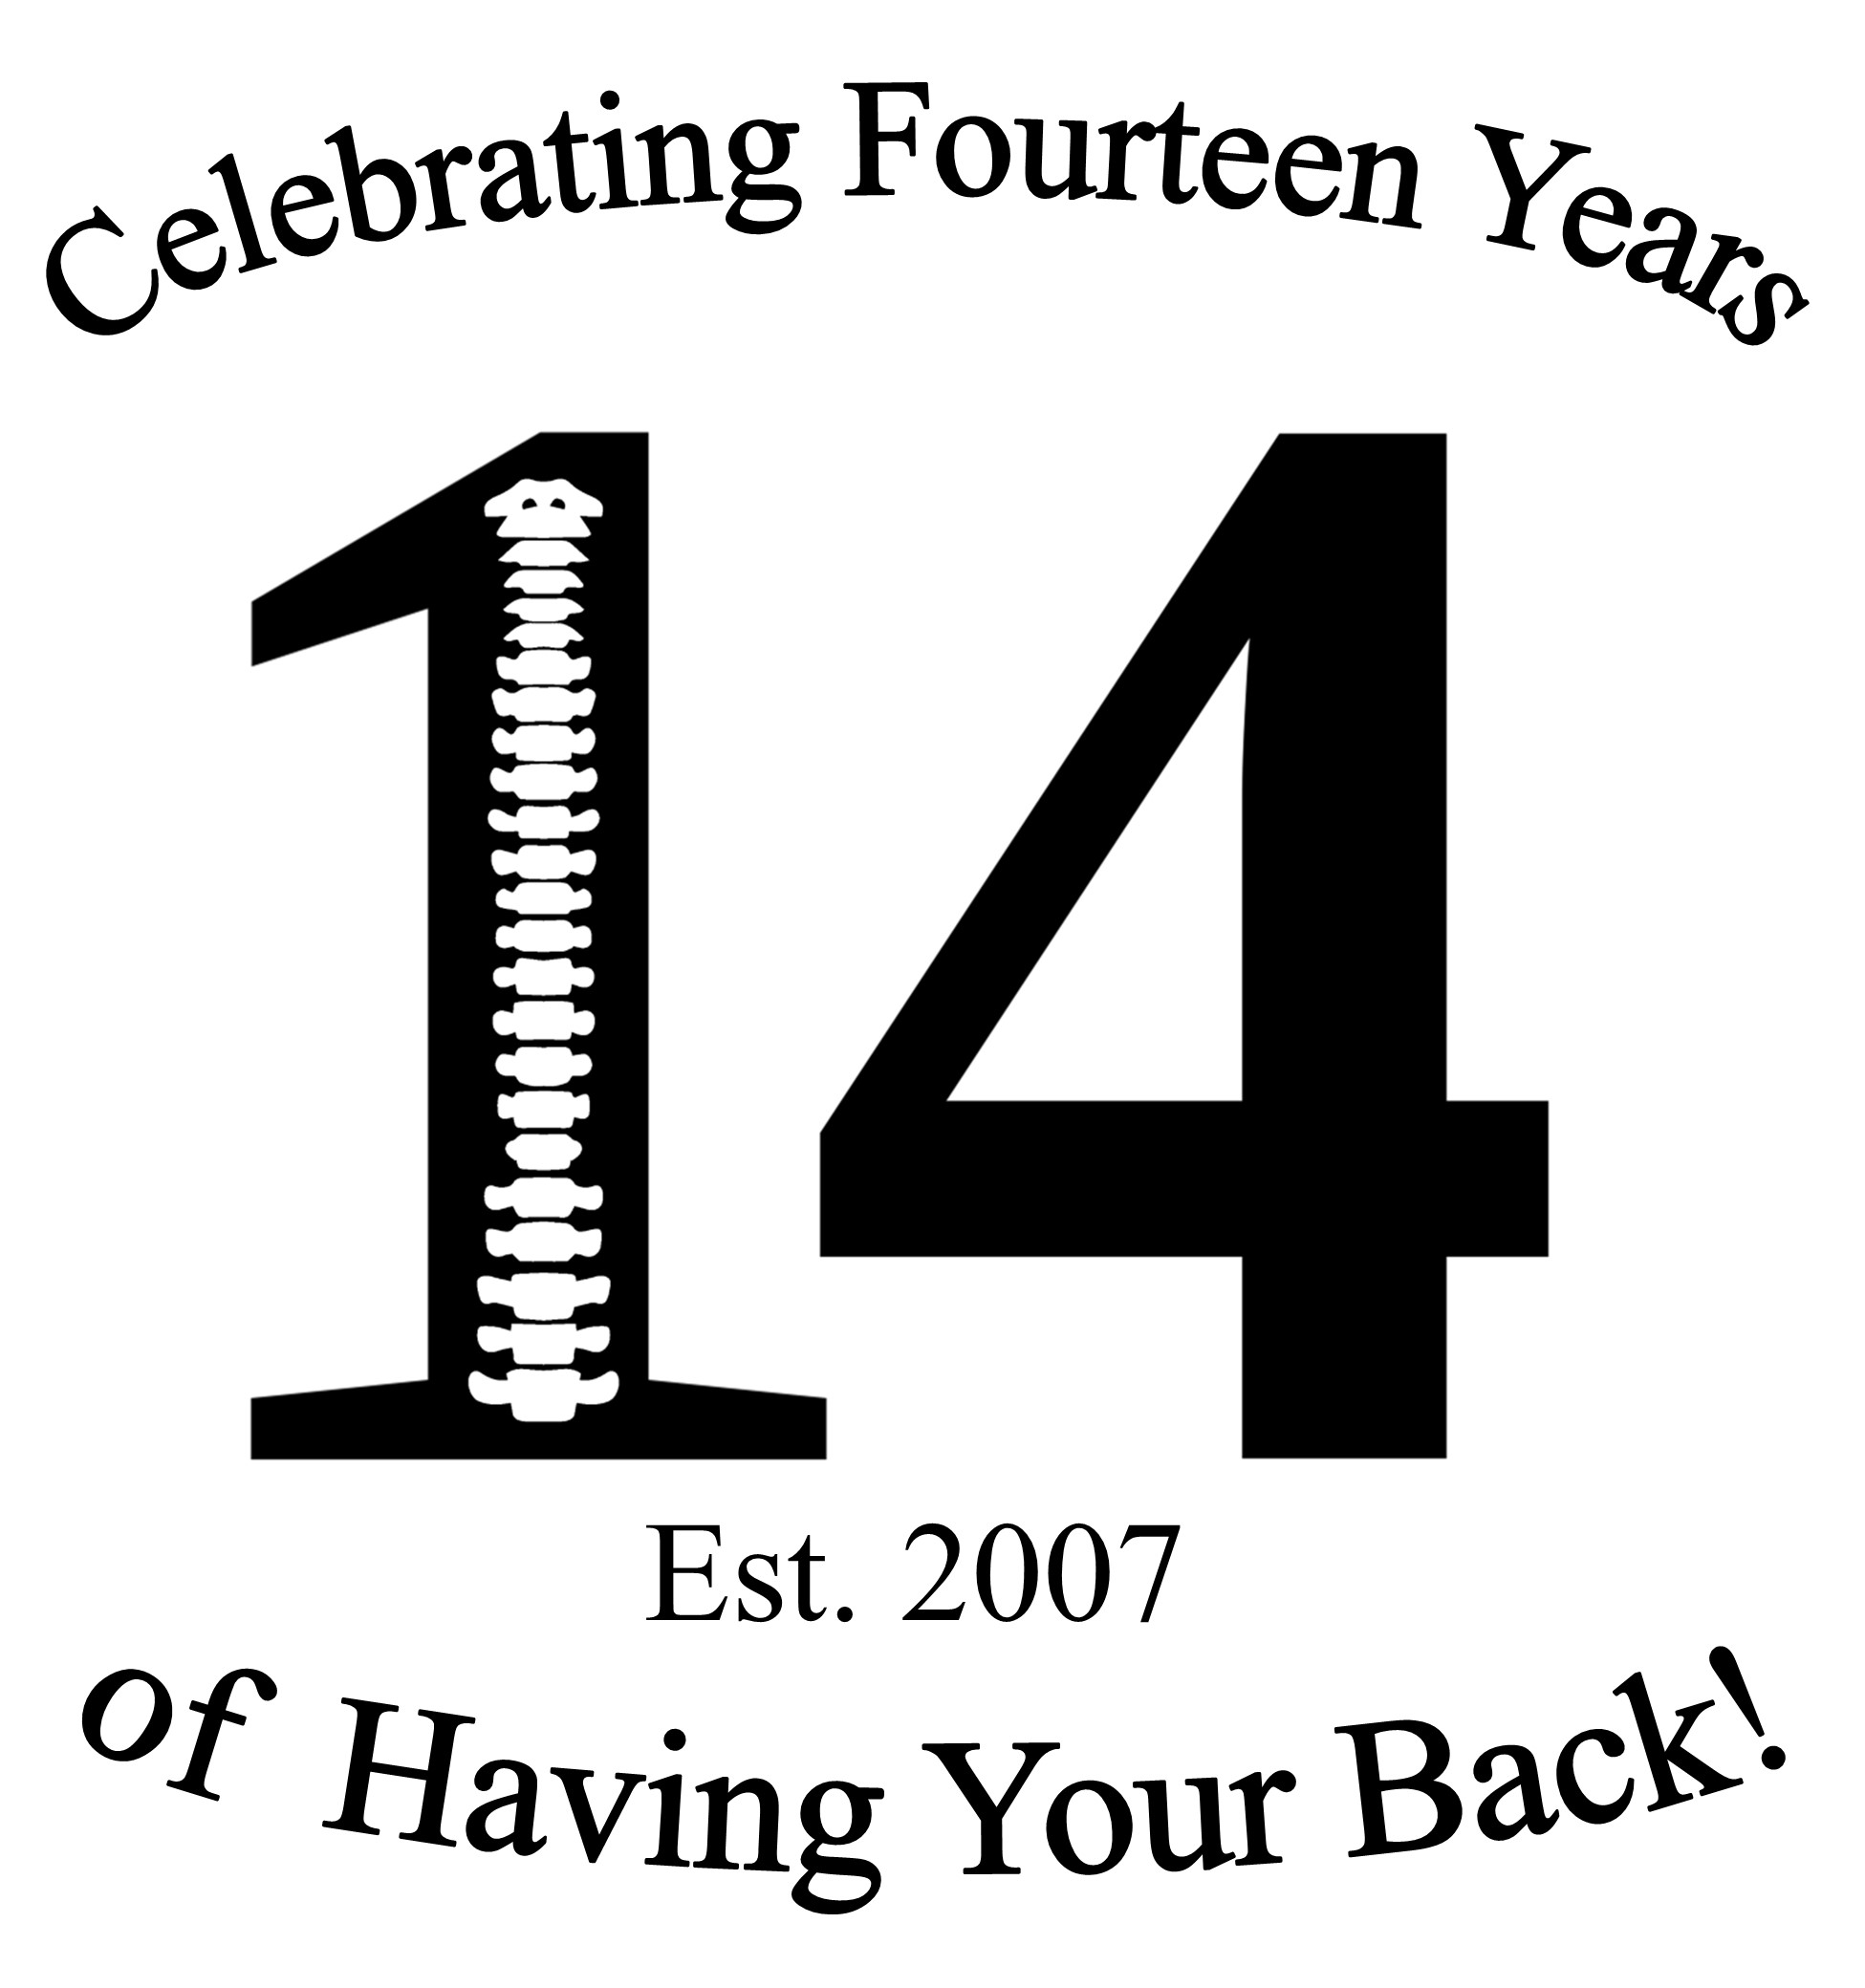 Celebrating 14 Years of Having Your Back